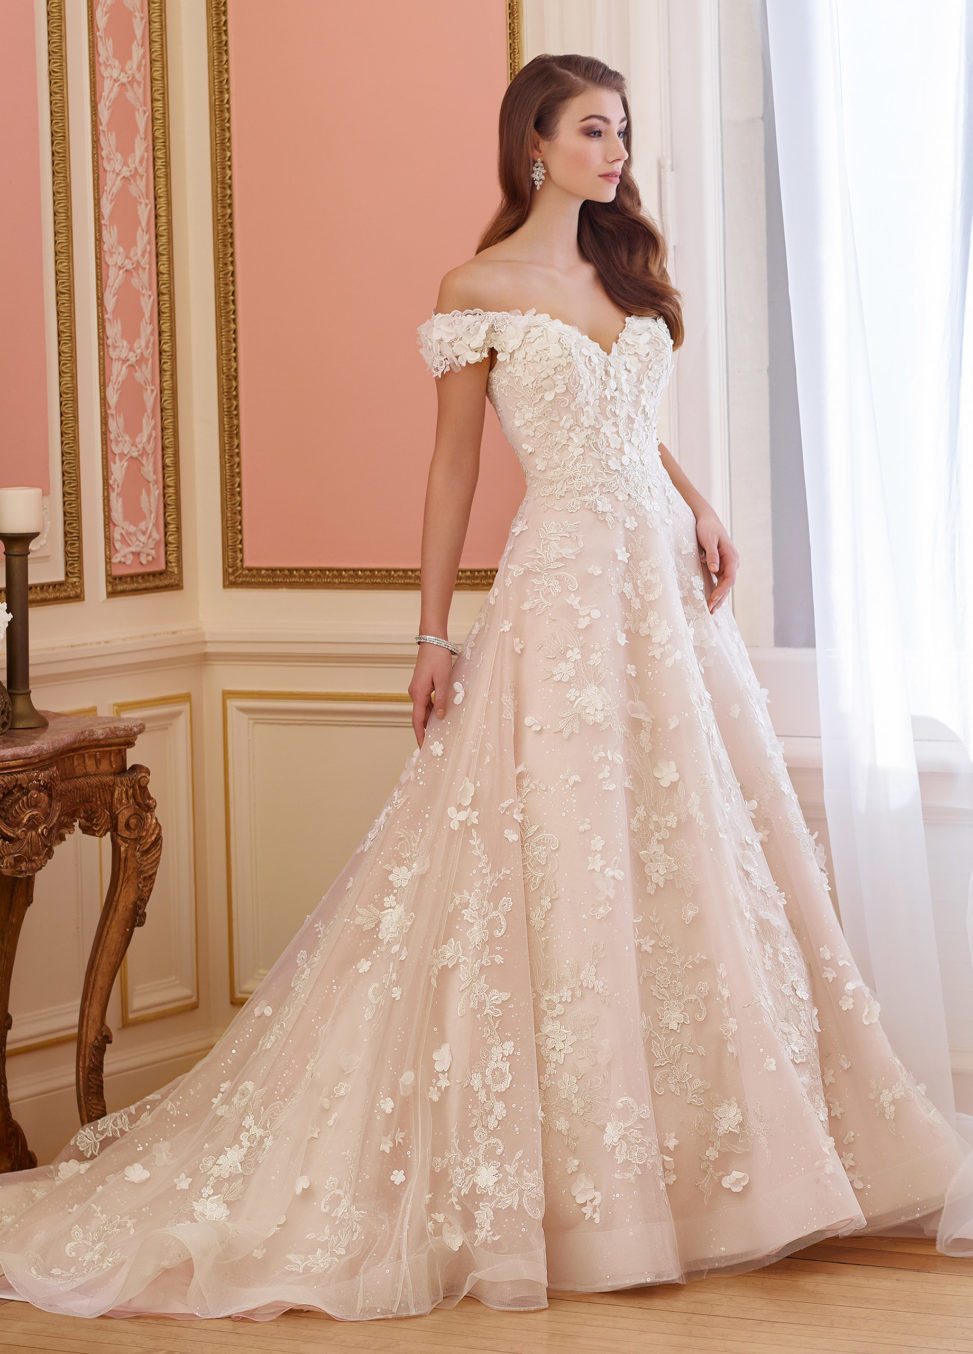 Wedding Dress Martin Thornburg 217230 "Elnora" , available in sizes 0-20, 18W-26W